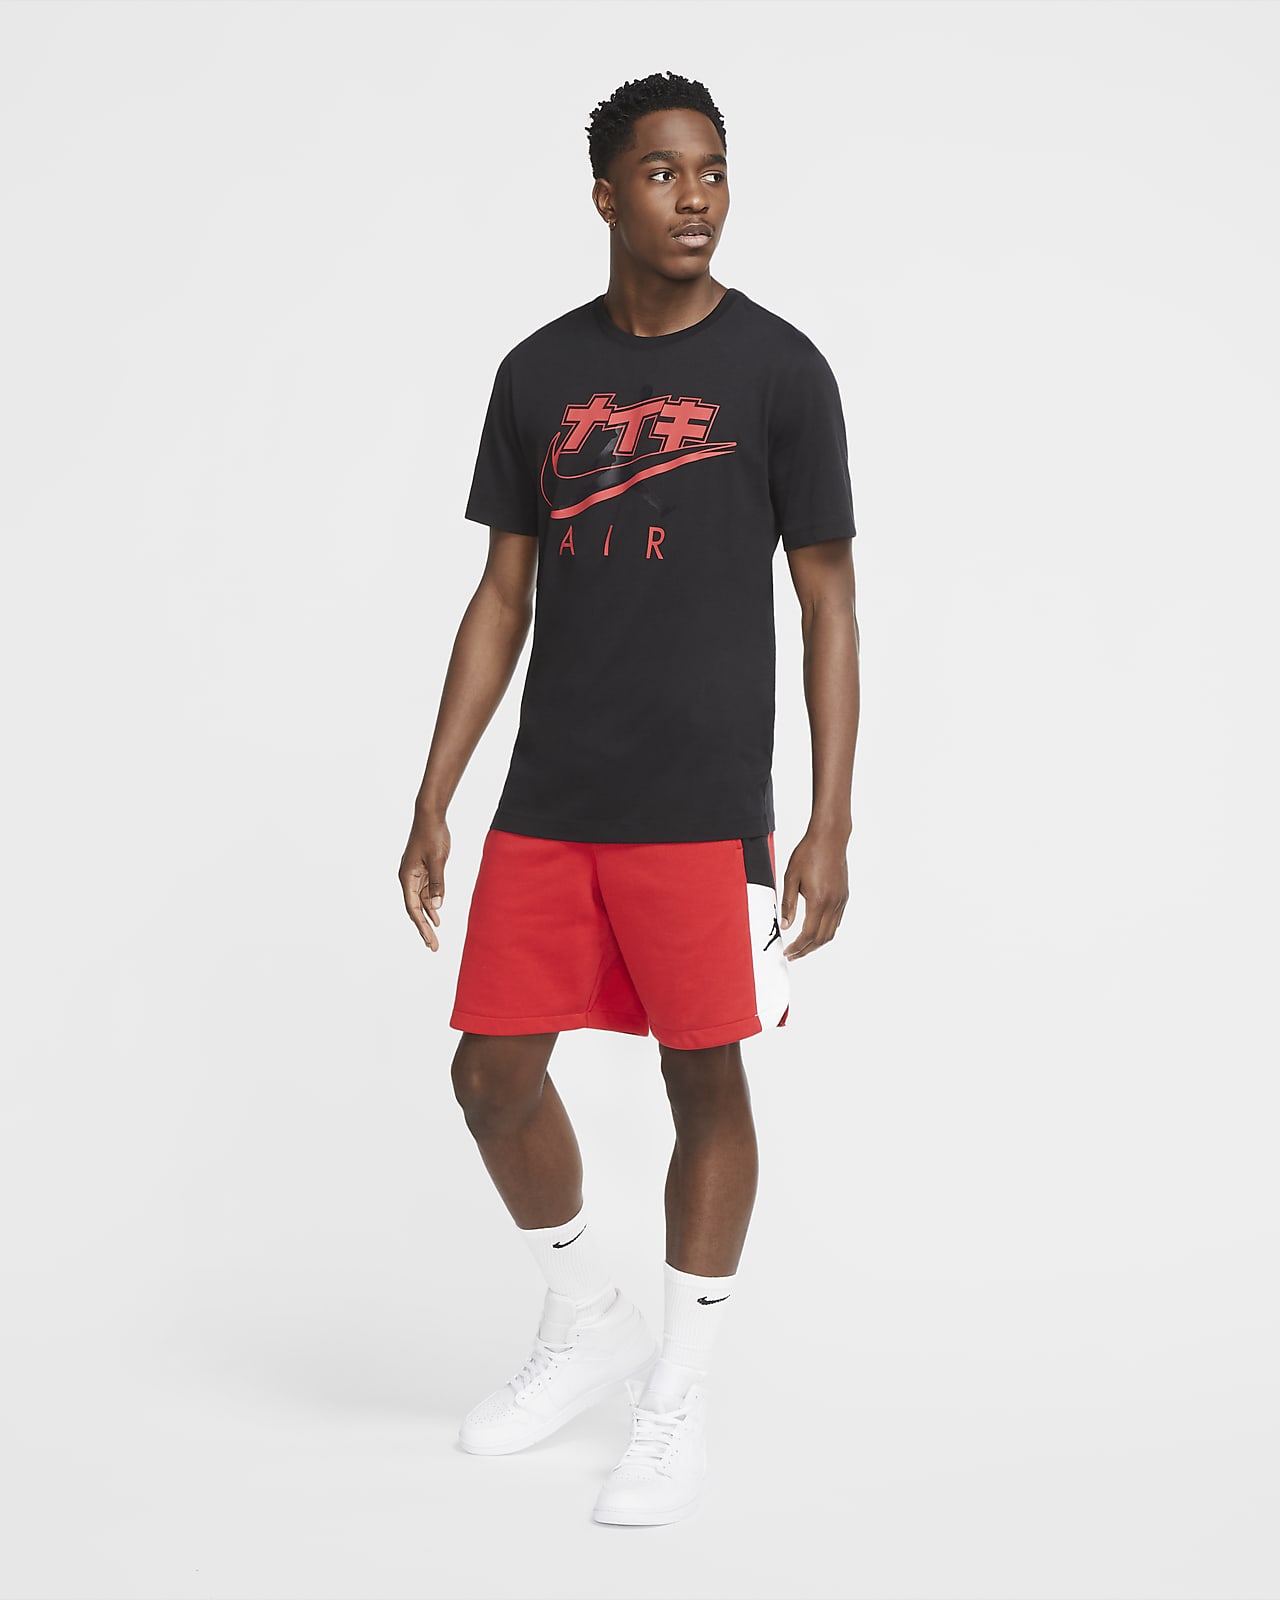 Buy t shirt jordan 1> OFF-69%